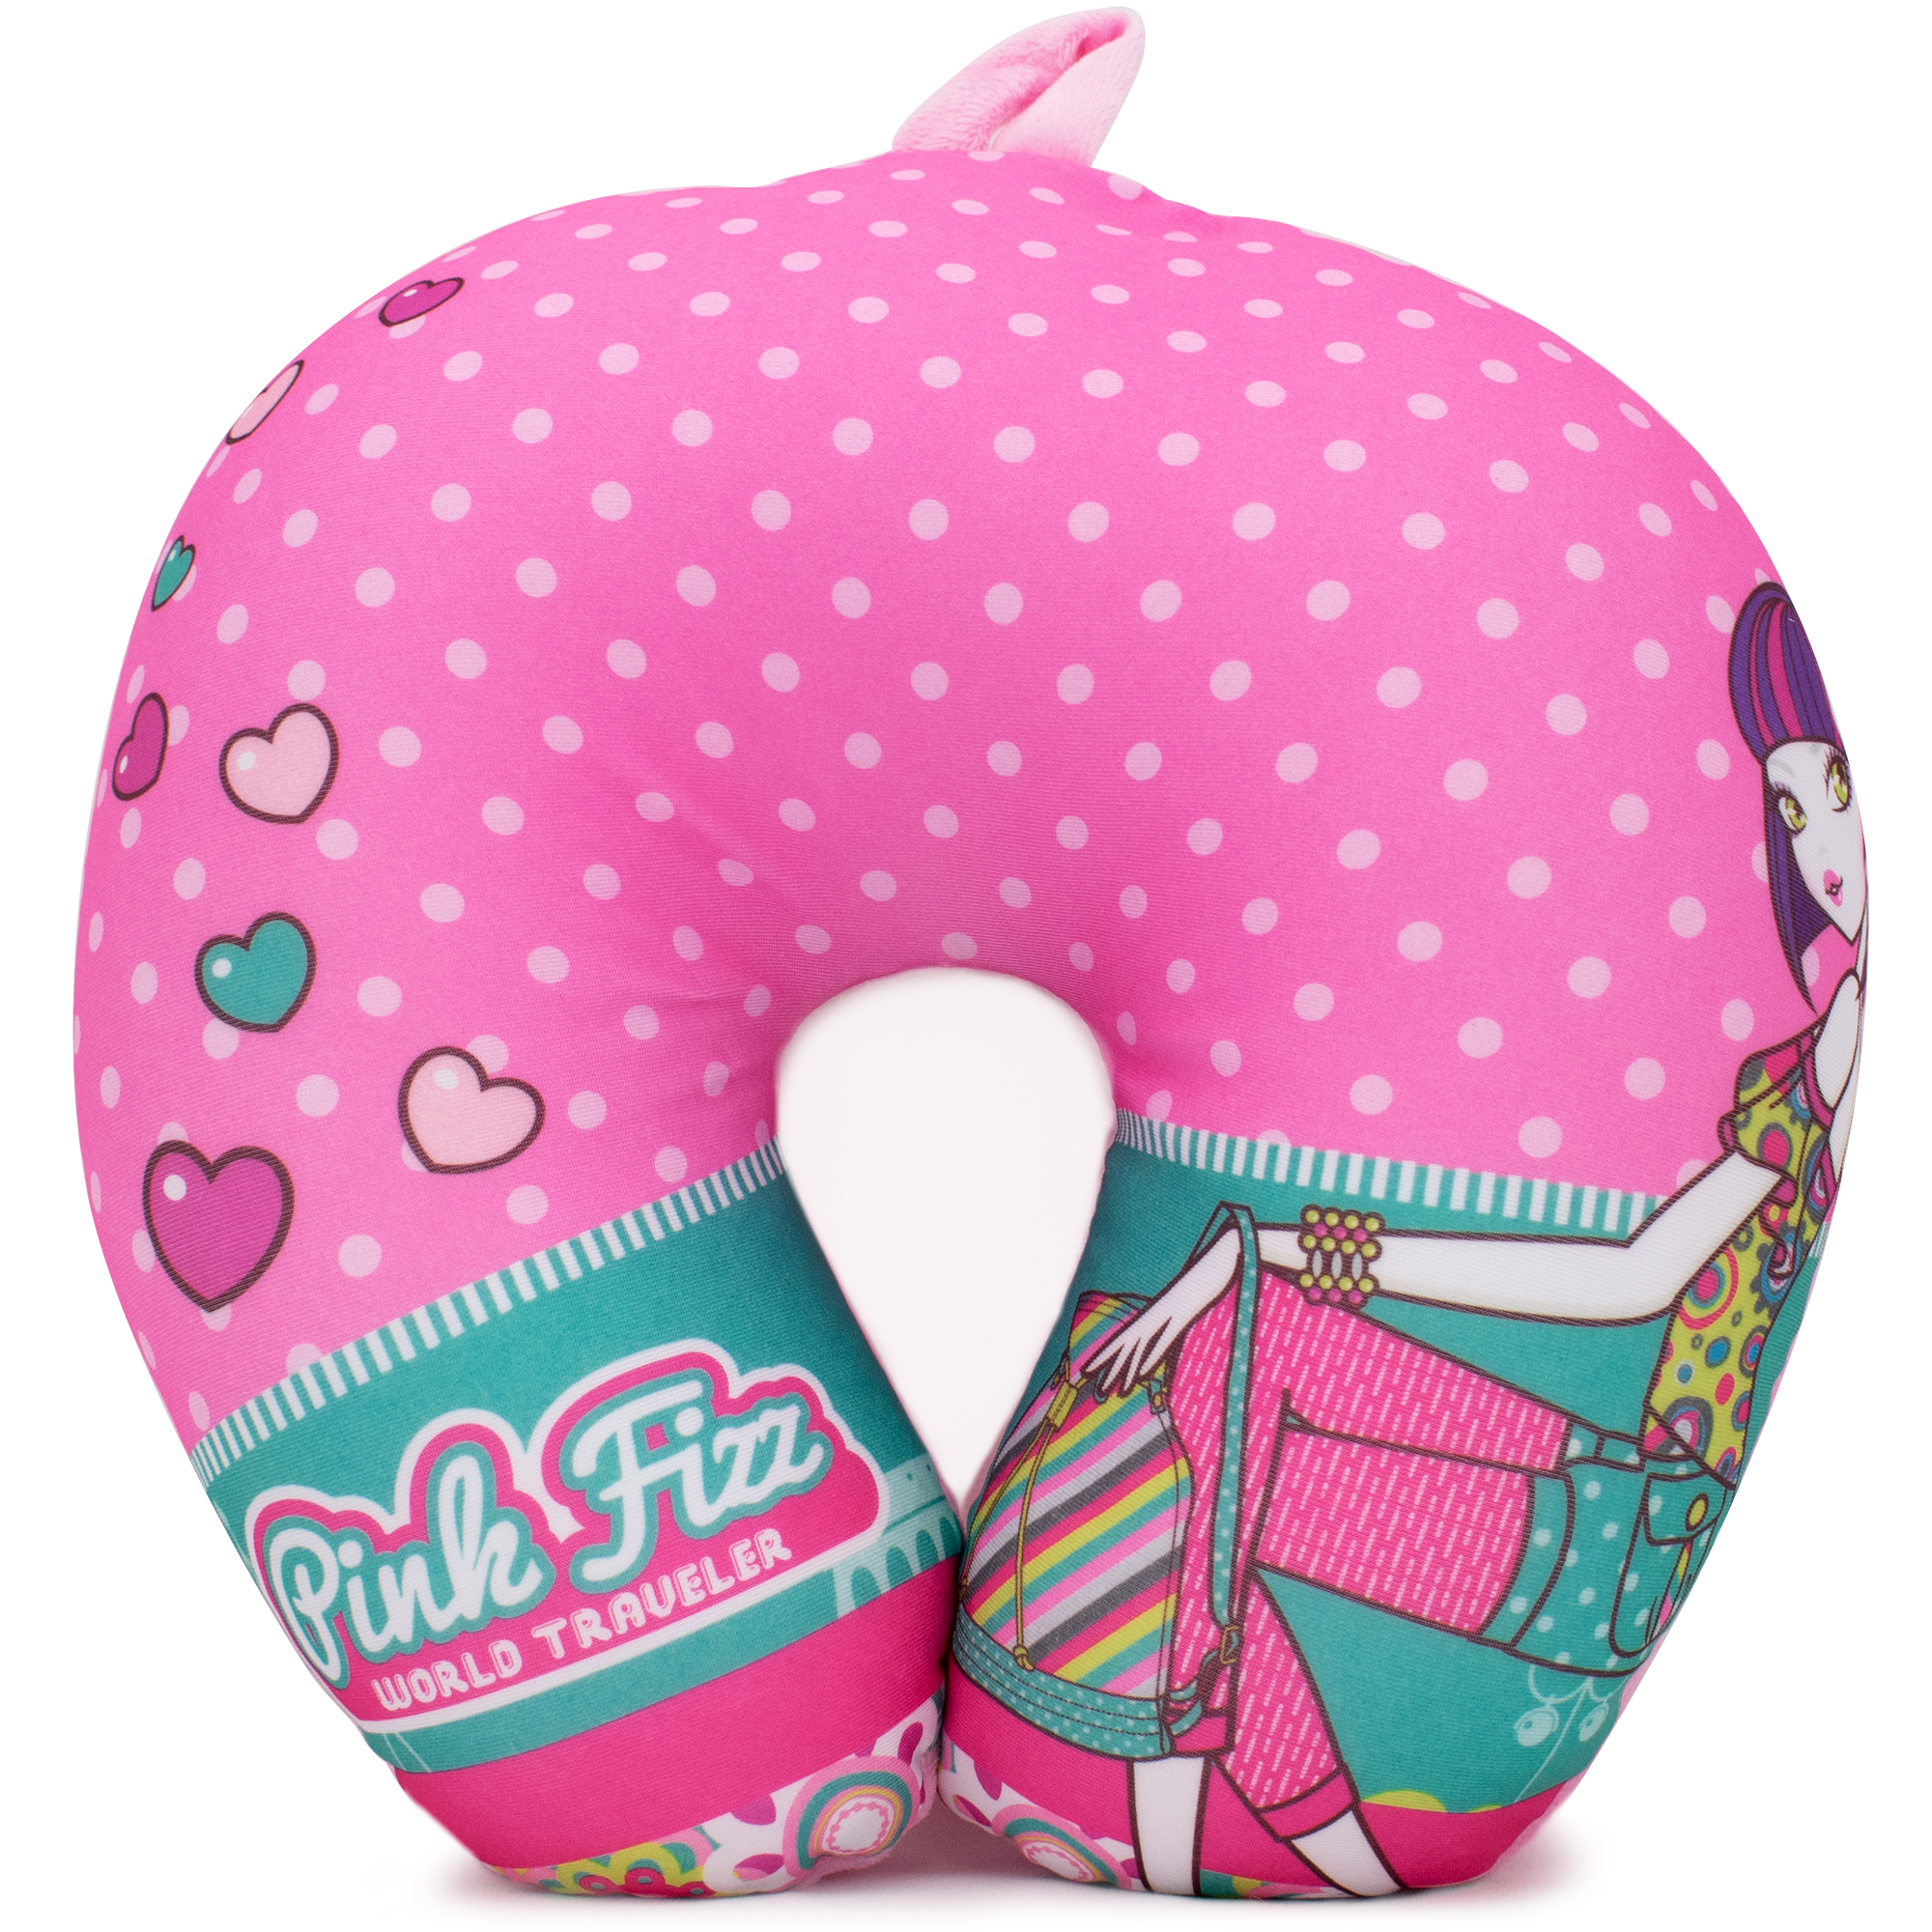 Pink Fizz Glamorous Microbeads Travel Neck Pillow for Girls (Kiera)